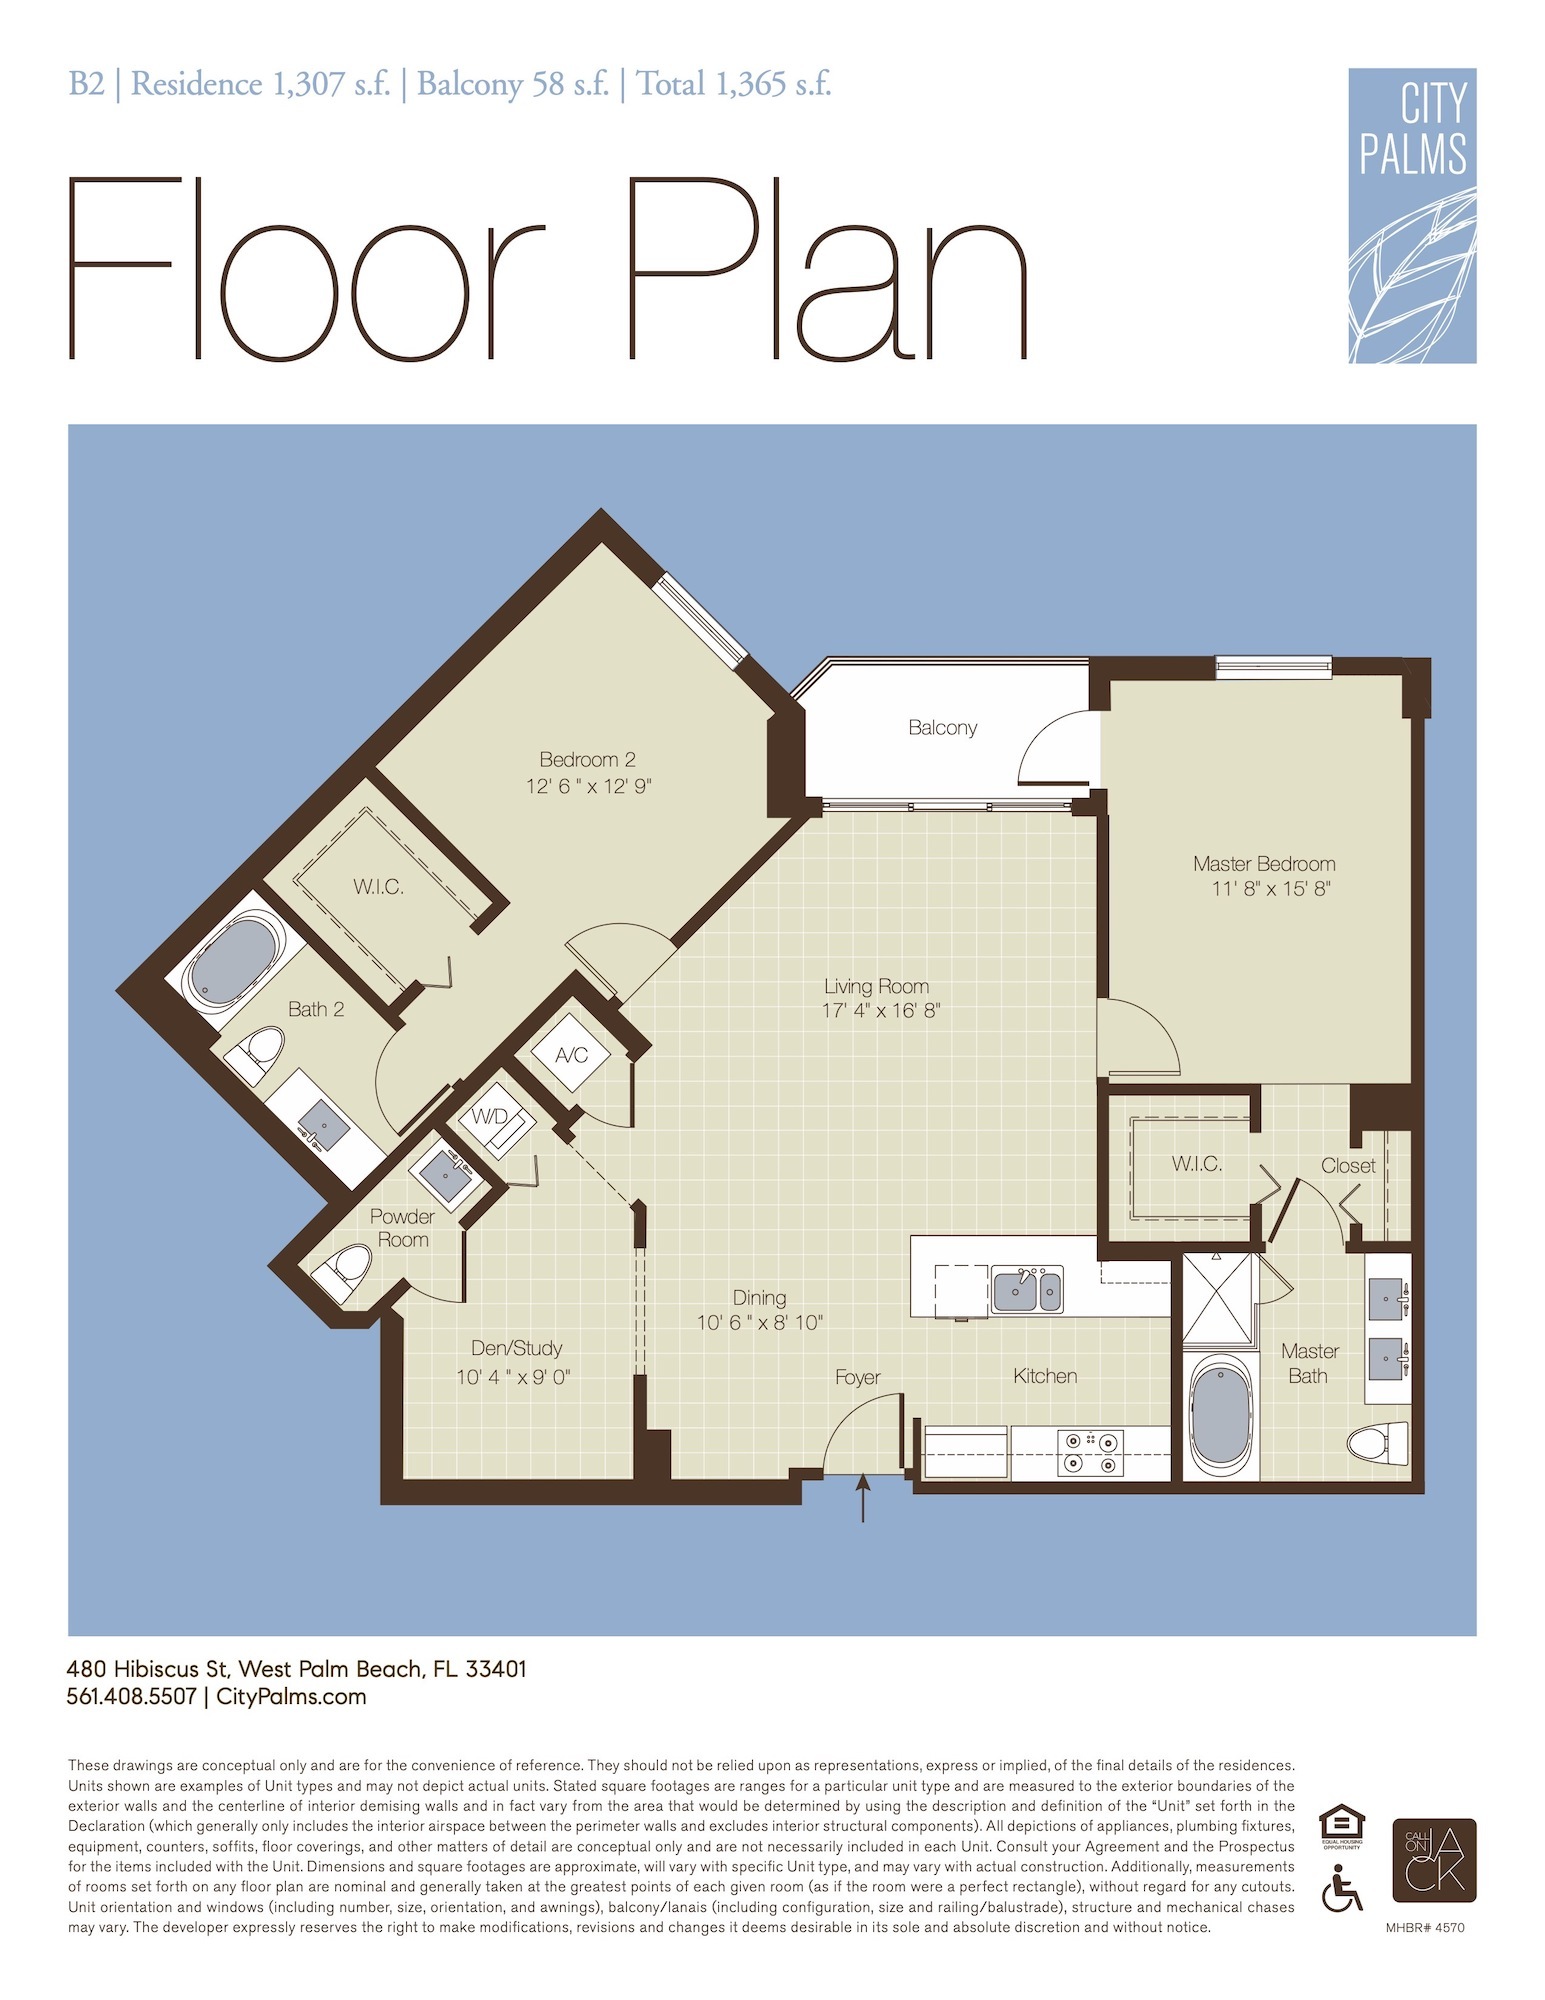 Floor Plan for City Palms Floorplans, B2